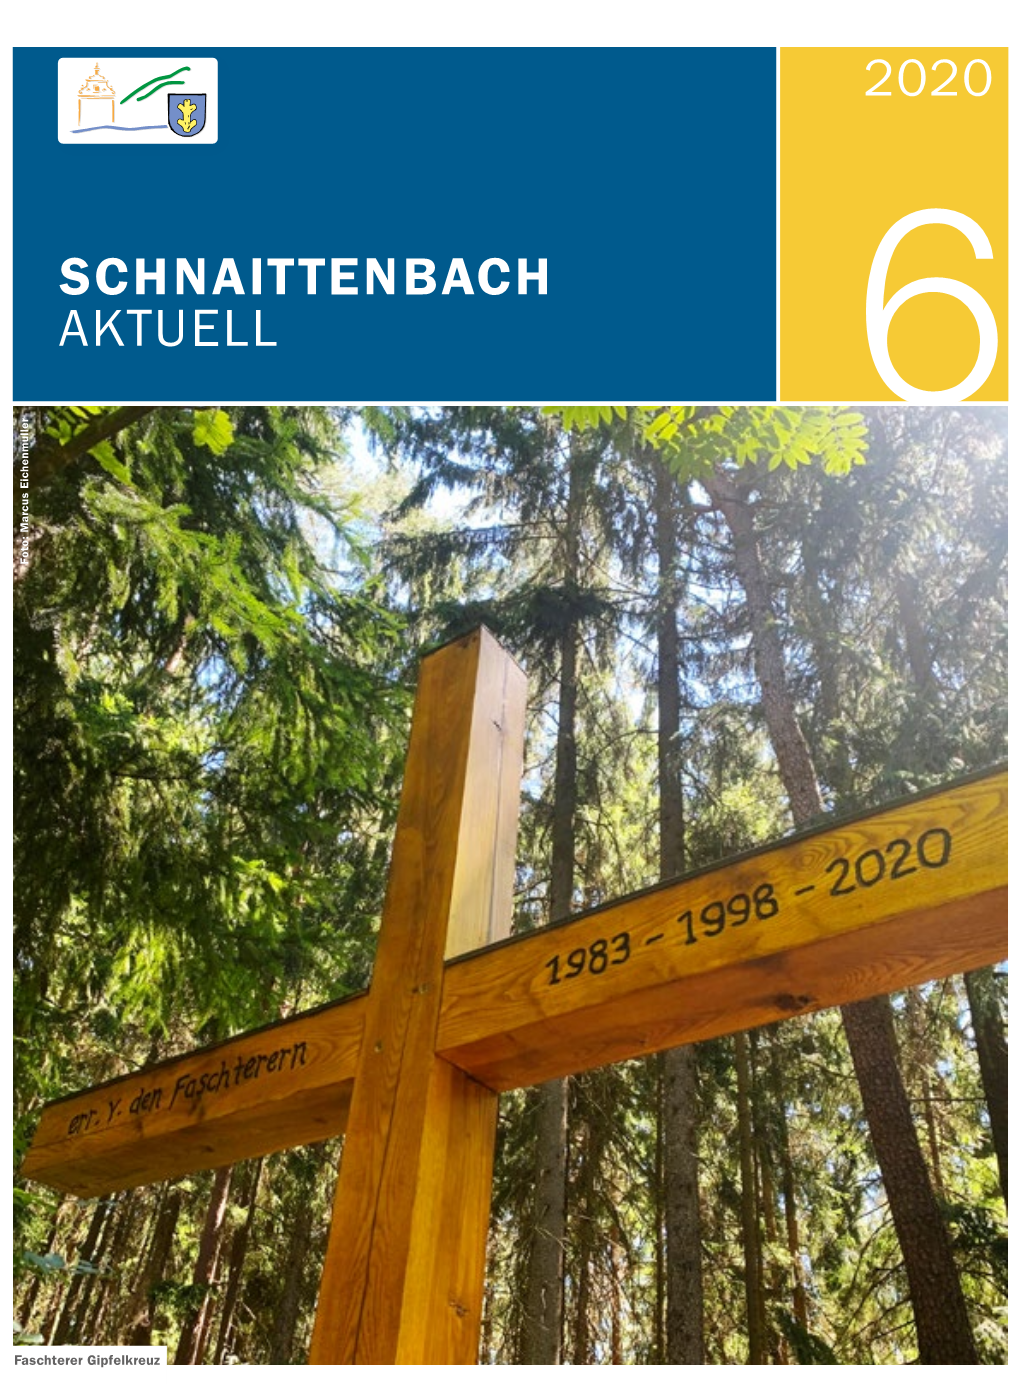 Schnaittenbach Aktuell Nr. 6/2020